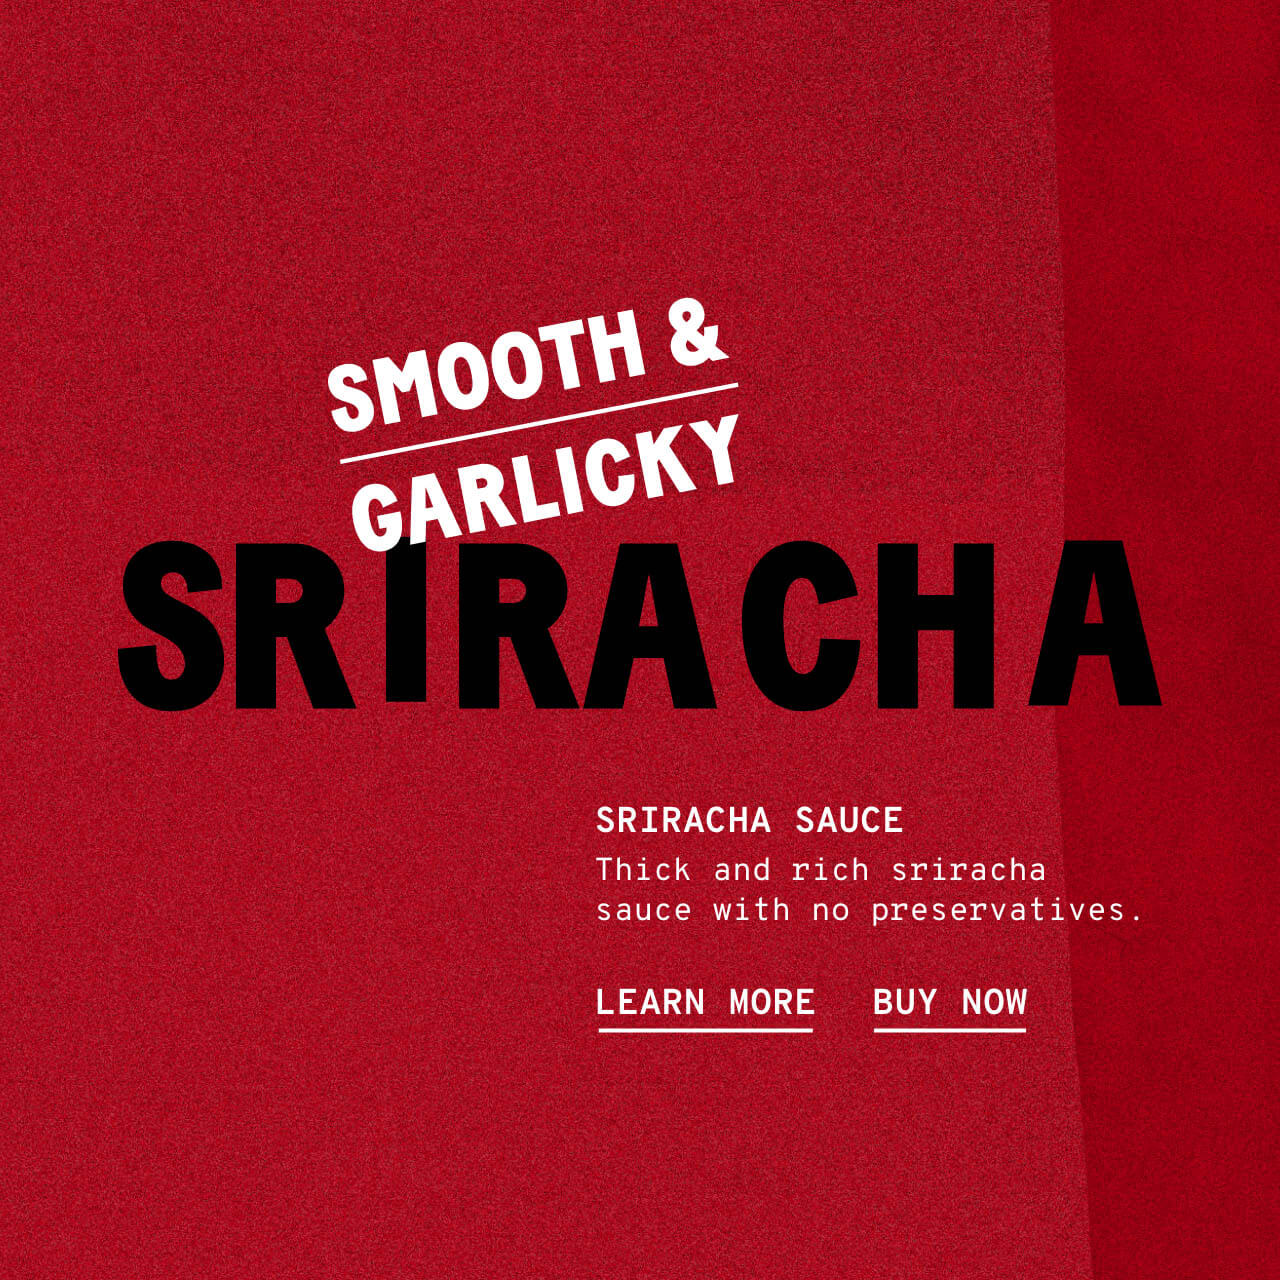 Sriracha Sauce - Description